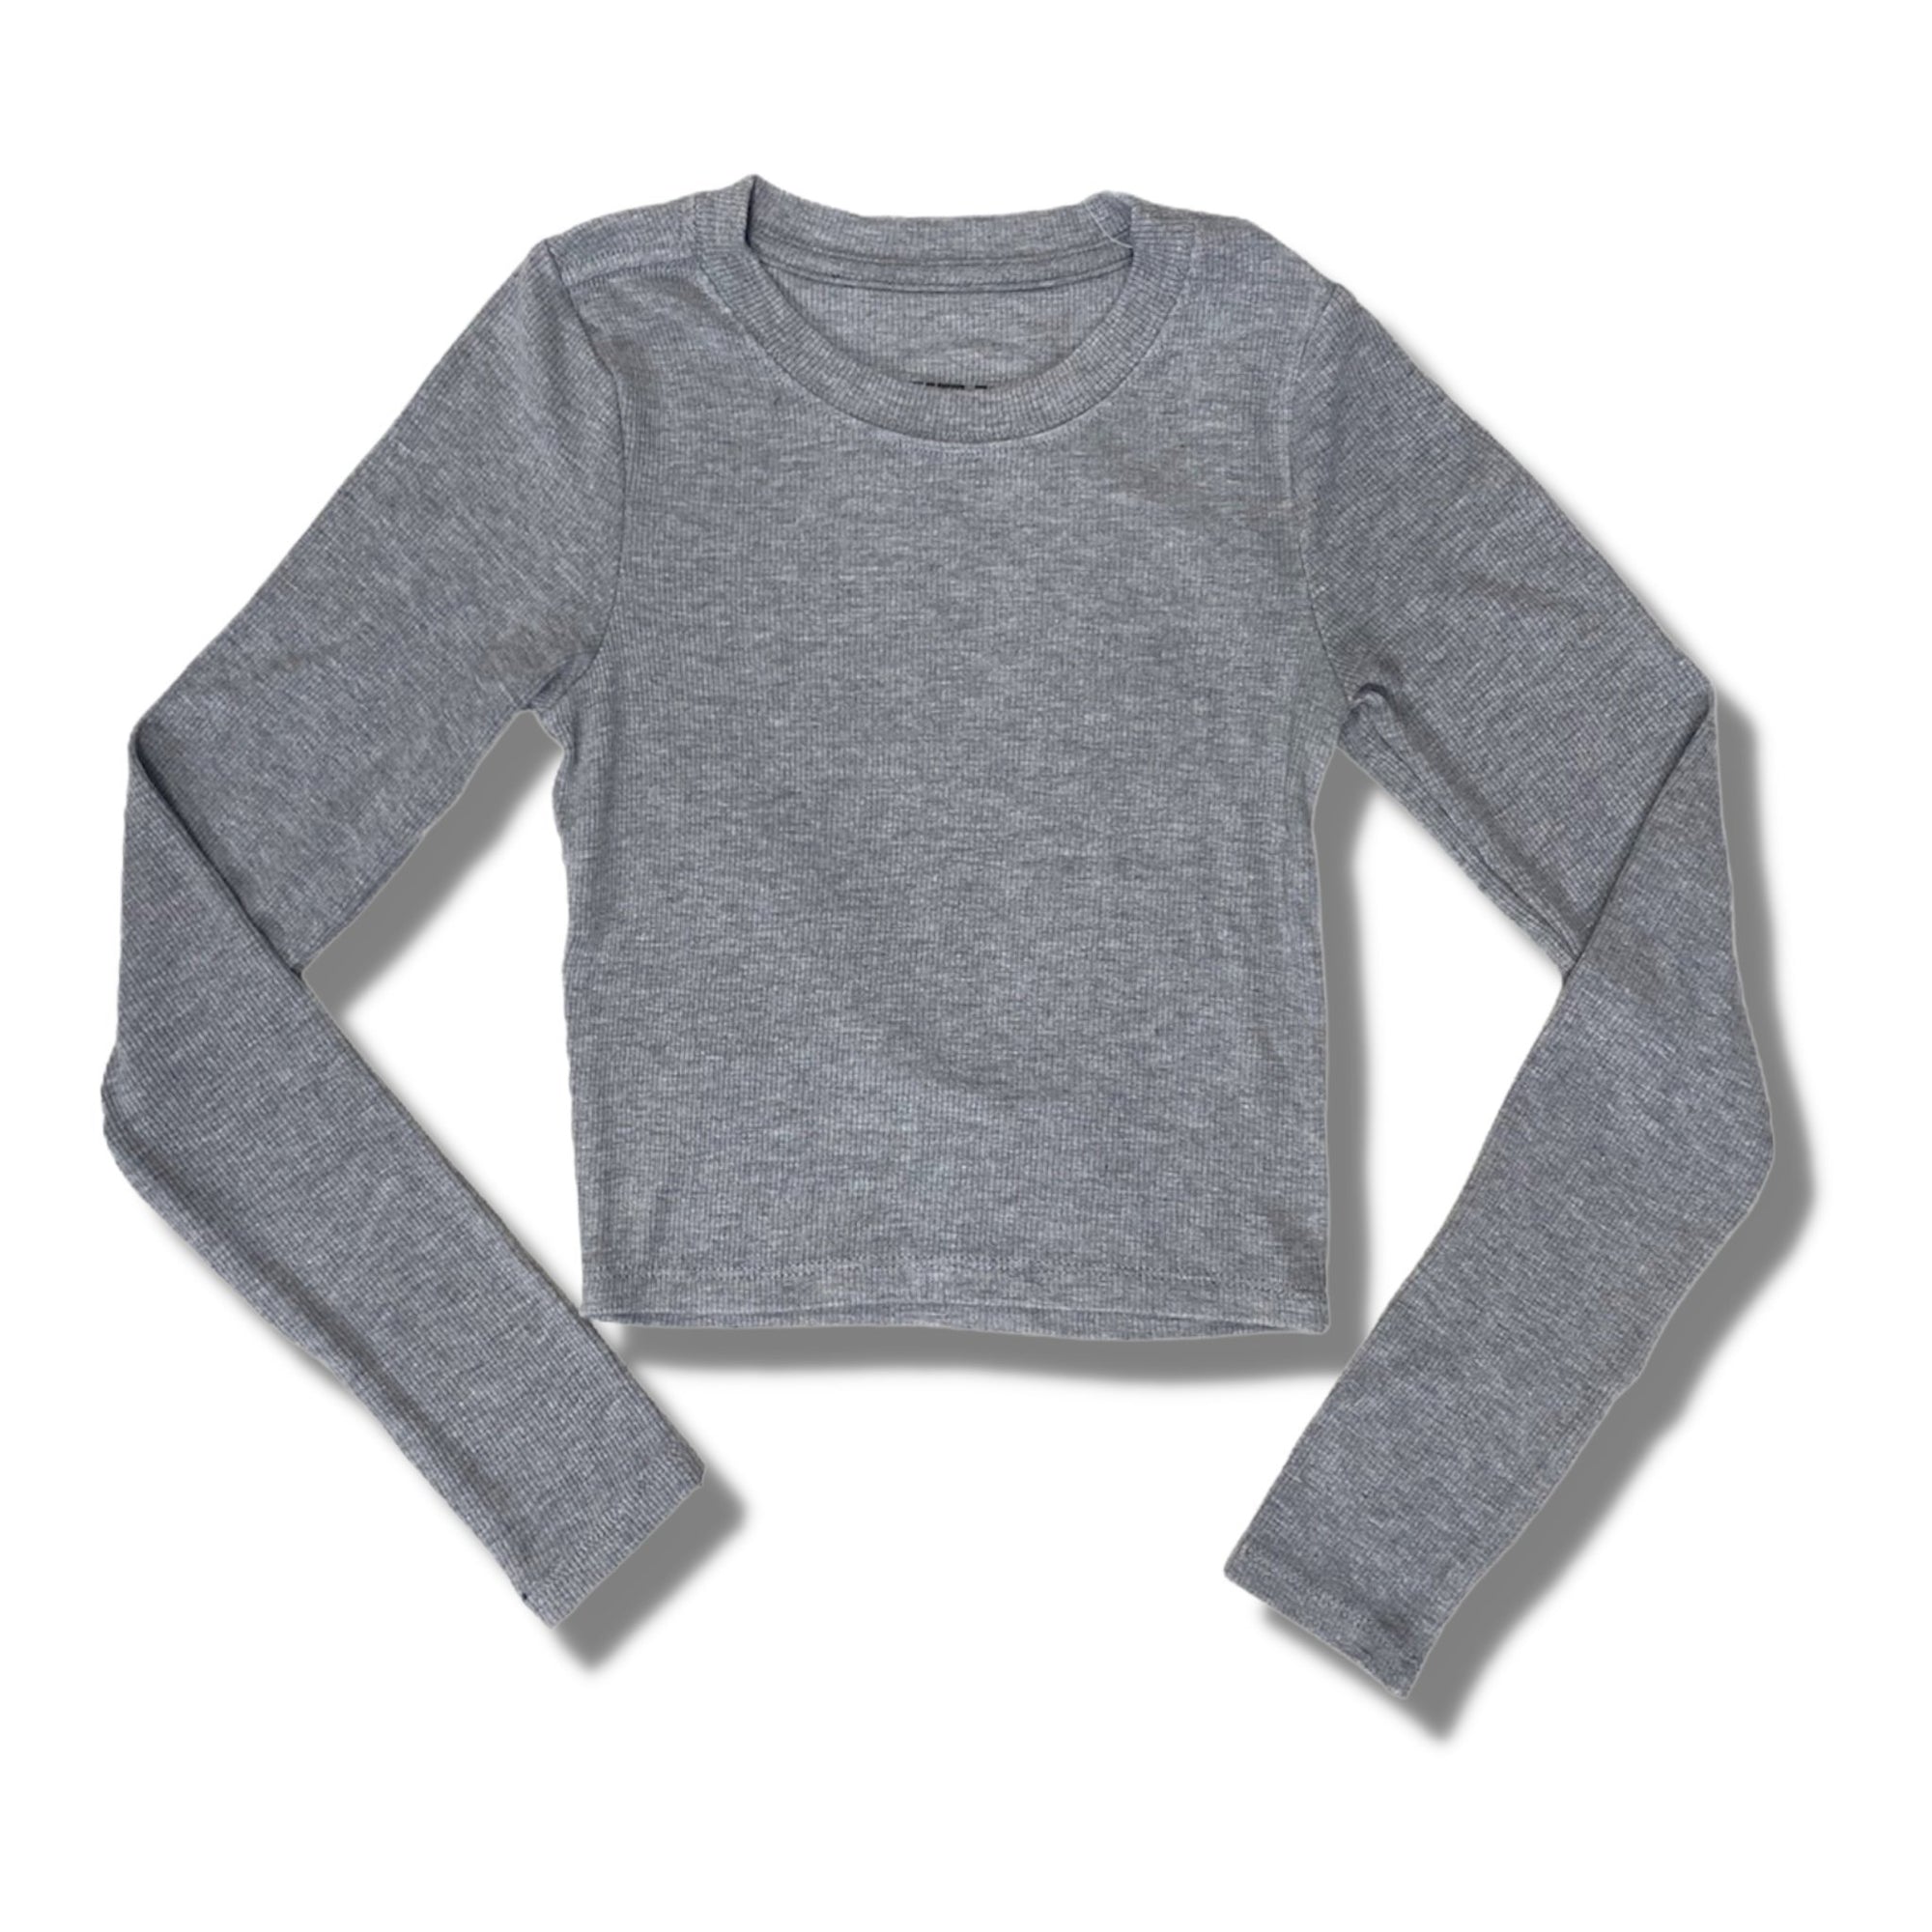 KatieJNYC Grey L/S Livi Tee - a Spirit Animal - long sleeved tee shirt $60-$75 Grey katie j